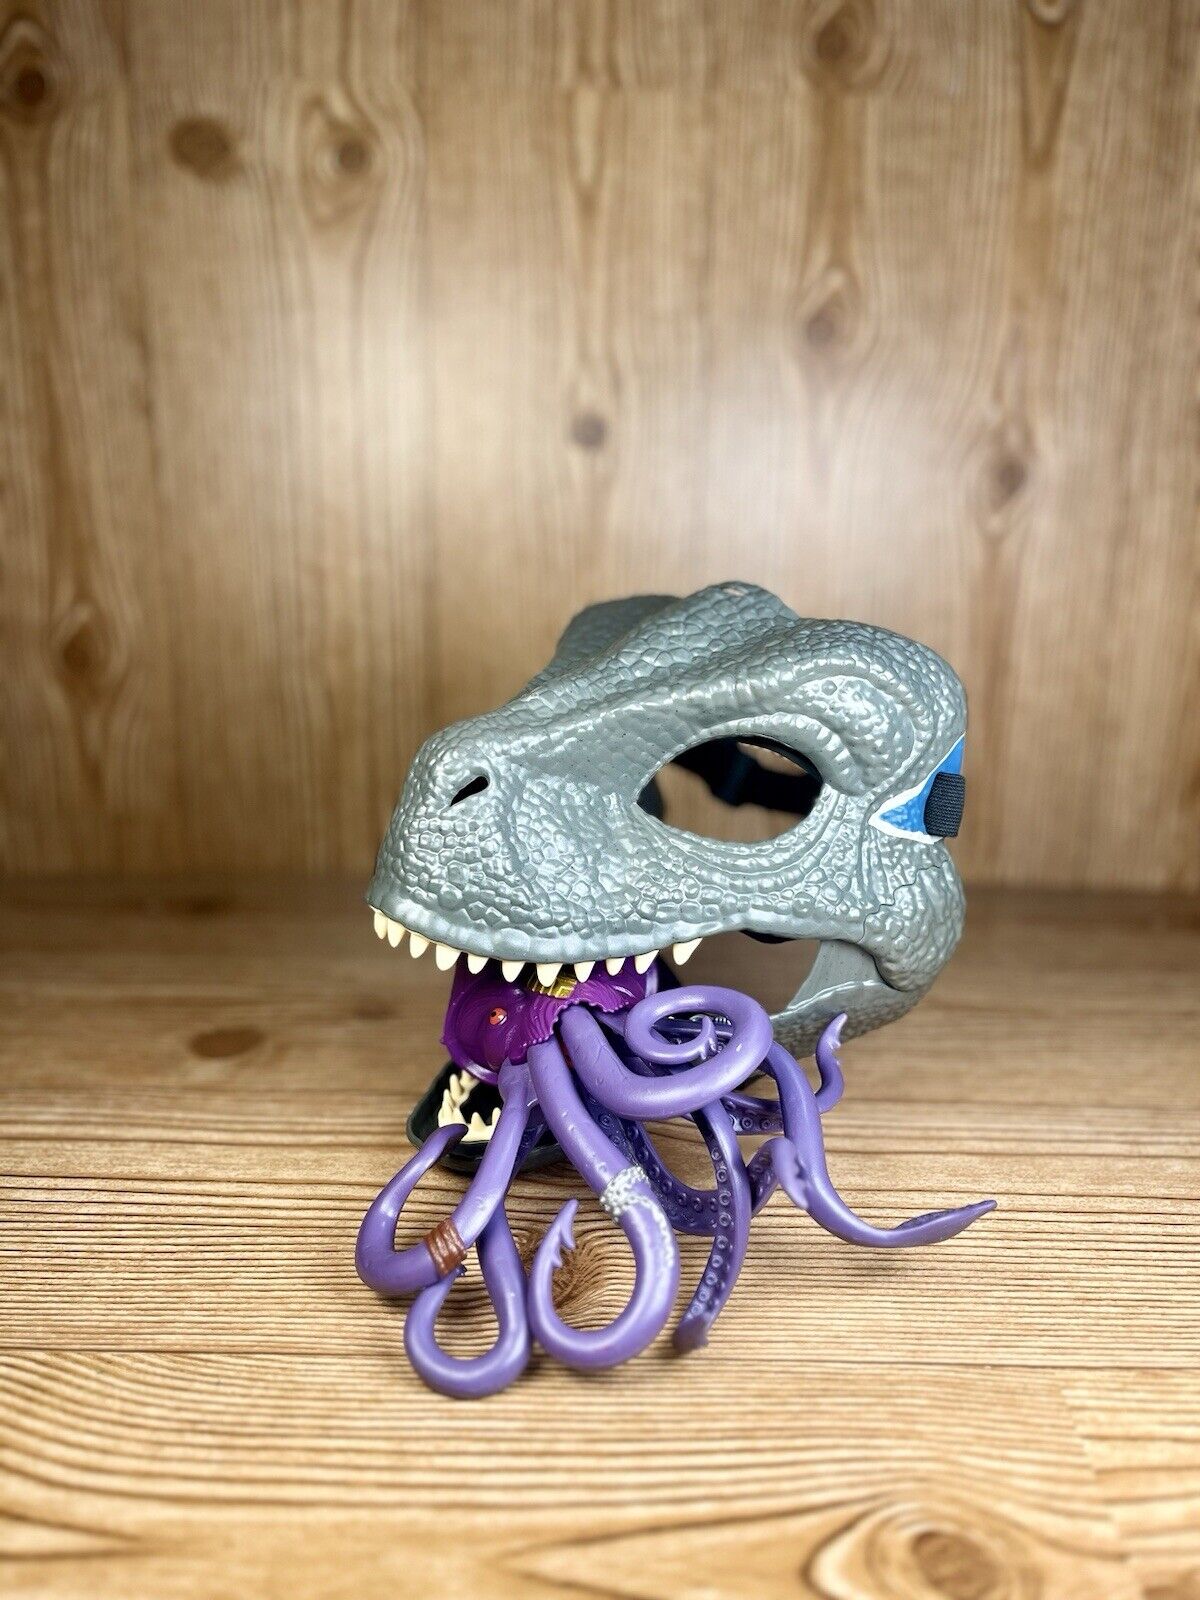  Jurassic World Velociraptor Blue Dinosaur Moving Mask Role Play Mattel 2018